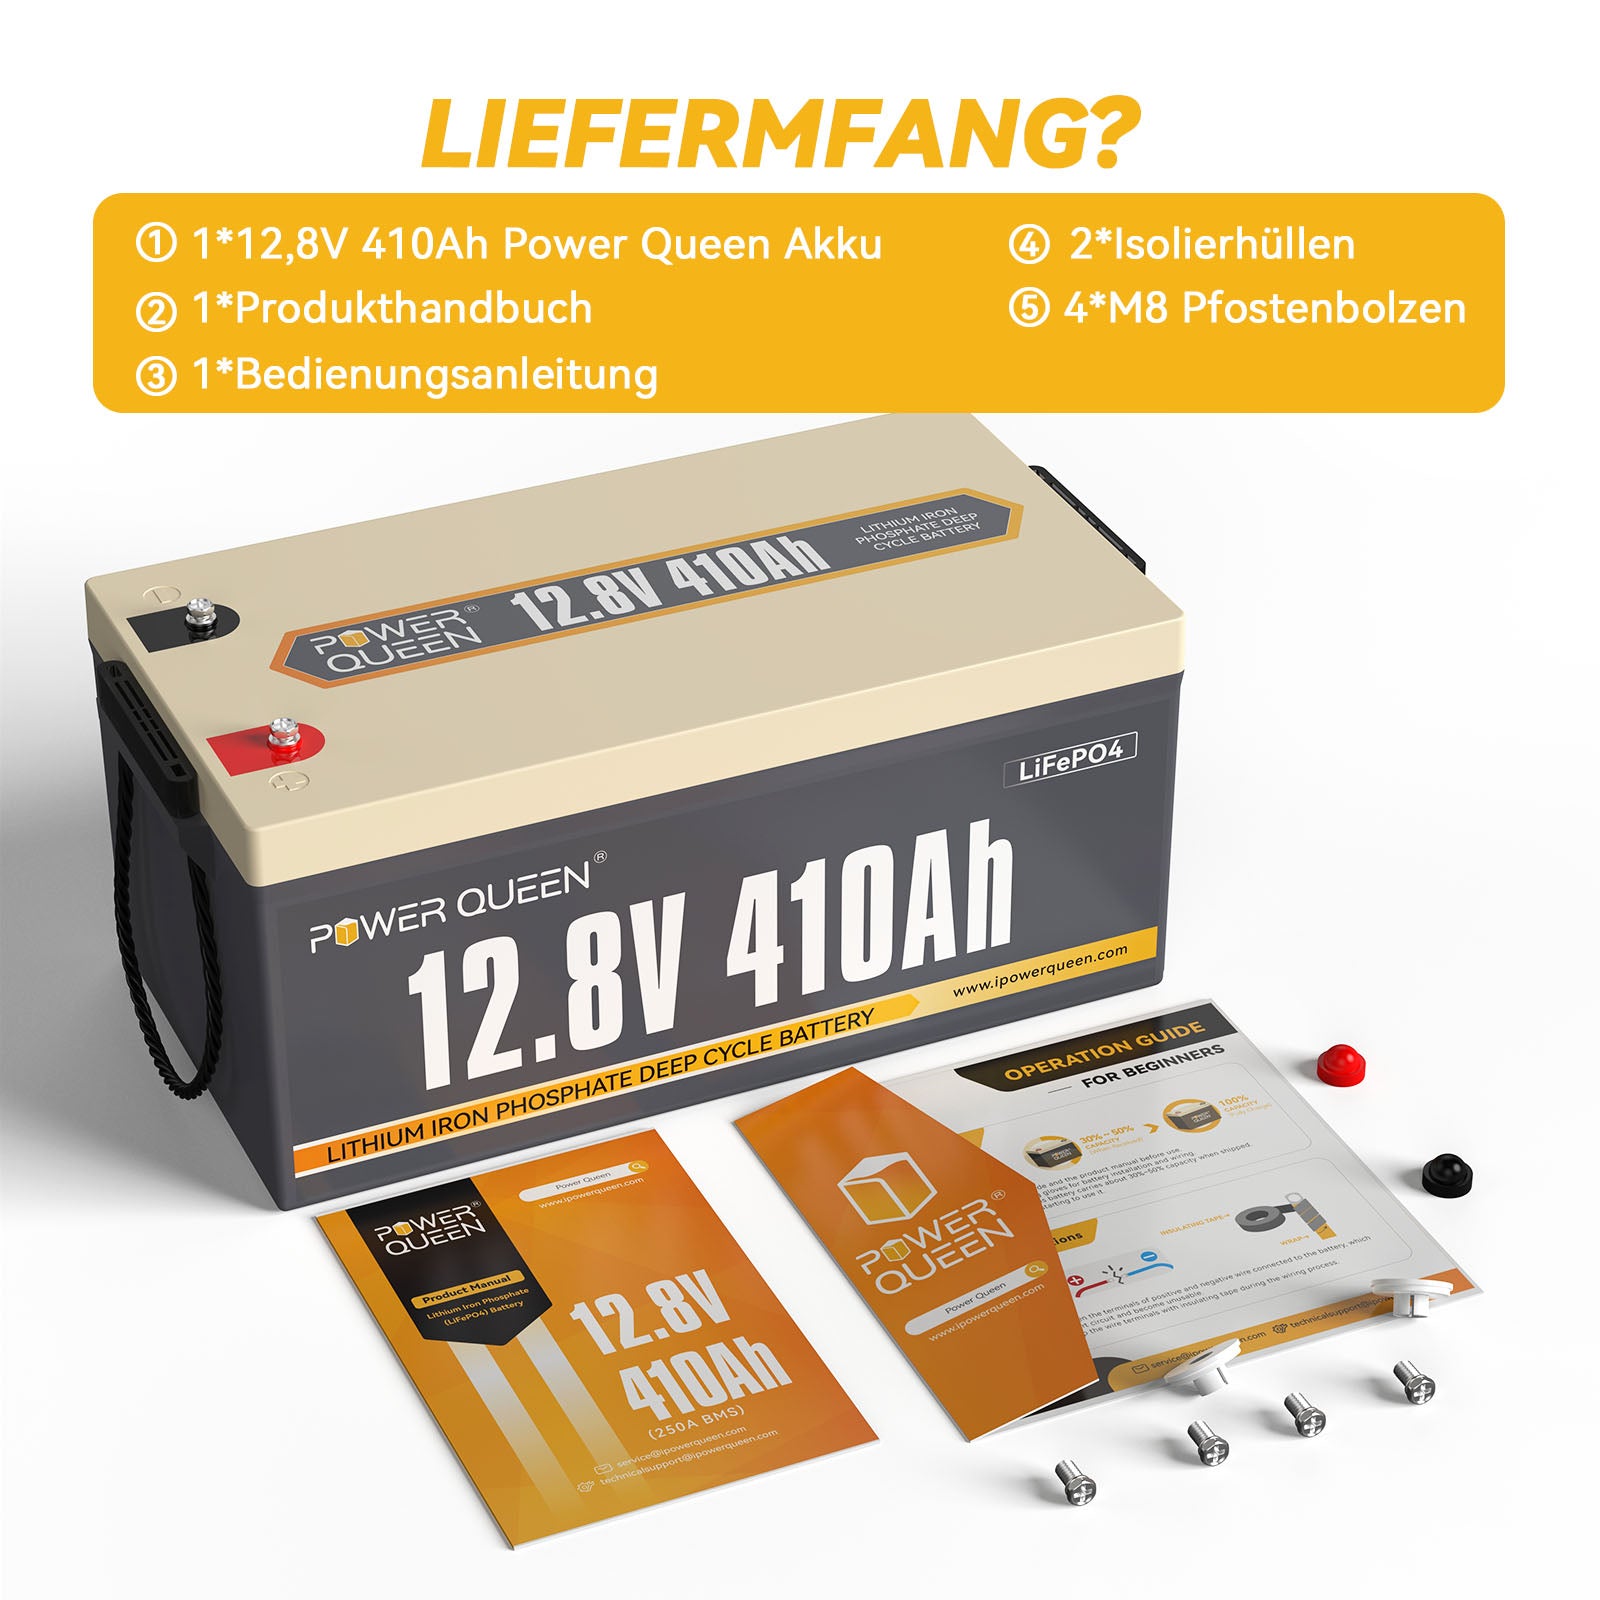 【0% IVA】Batteria Power Queen 12V 410Ah LiFePO4, BMS integrato da 250A